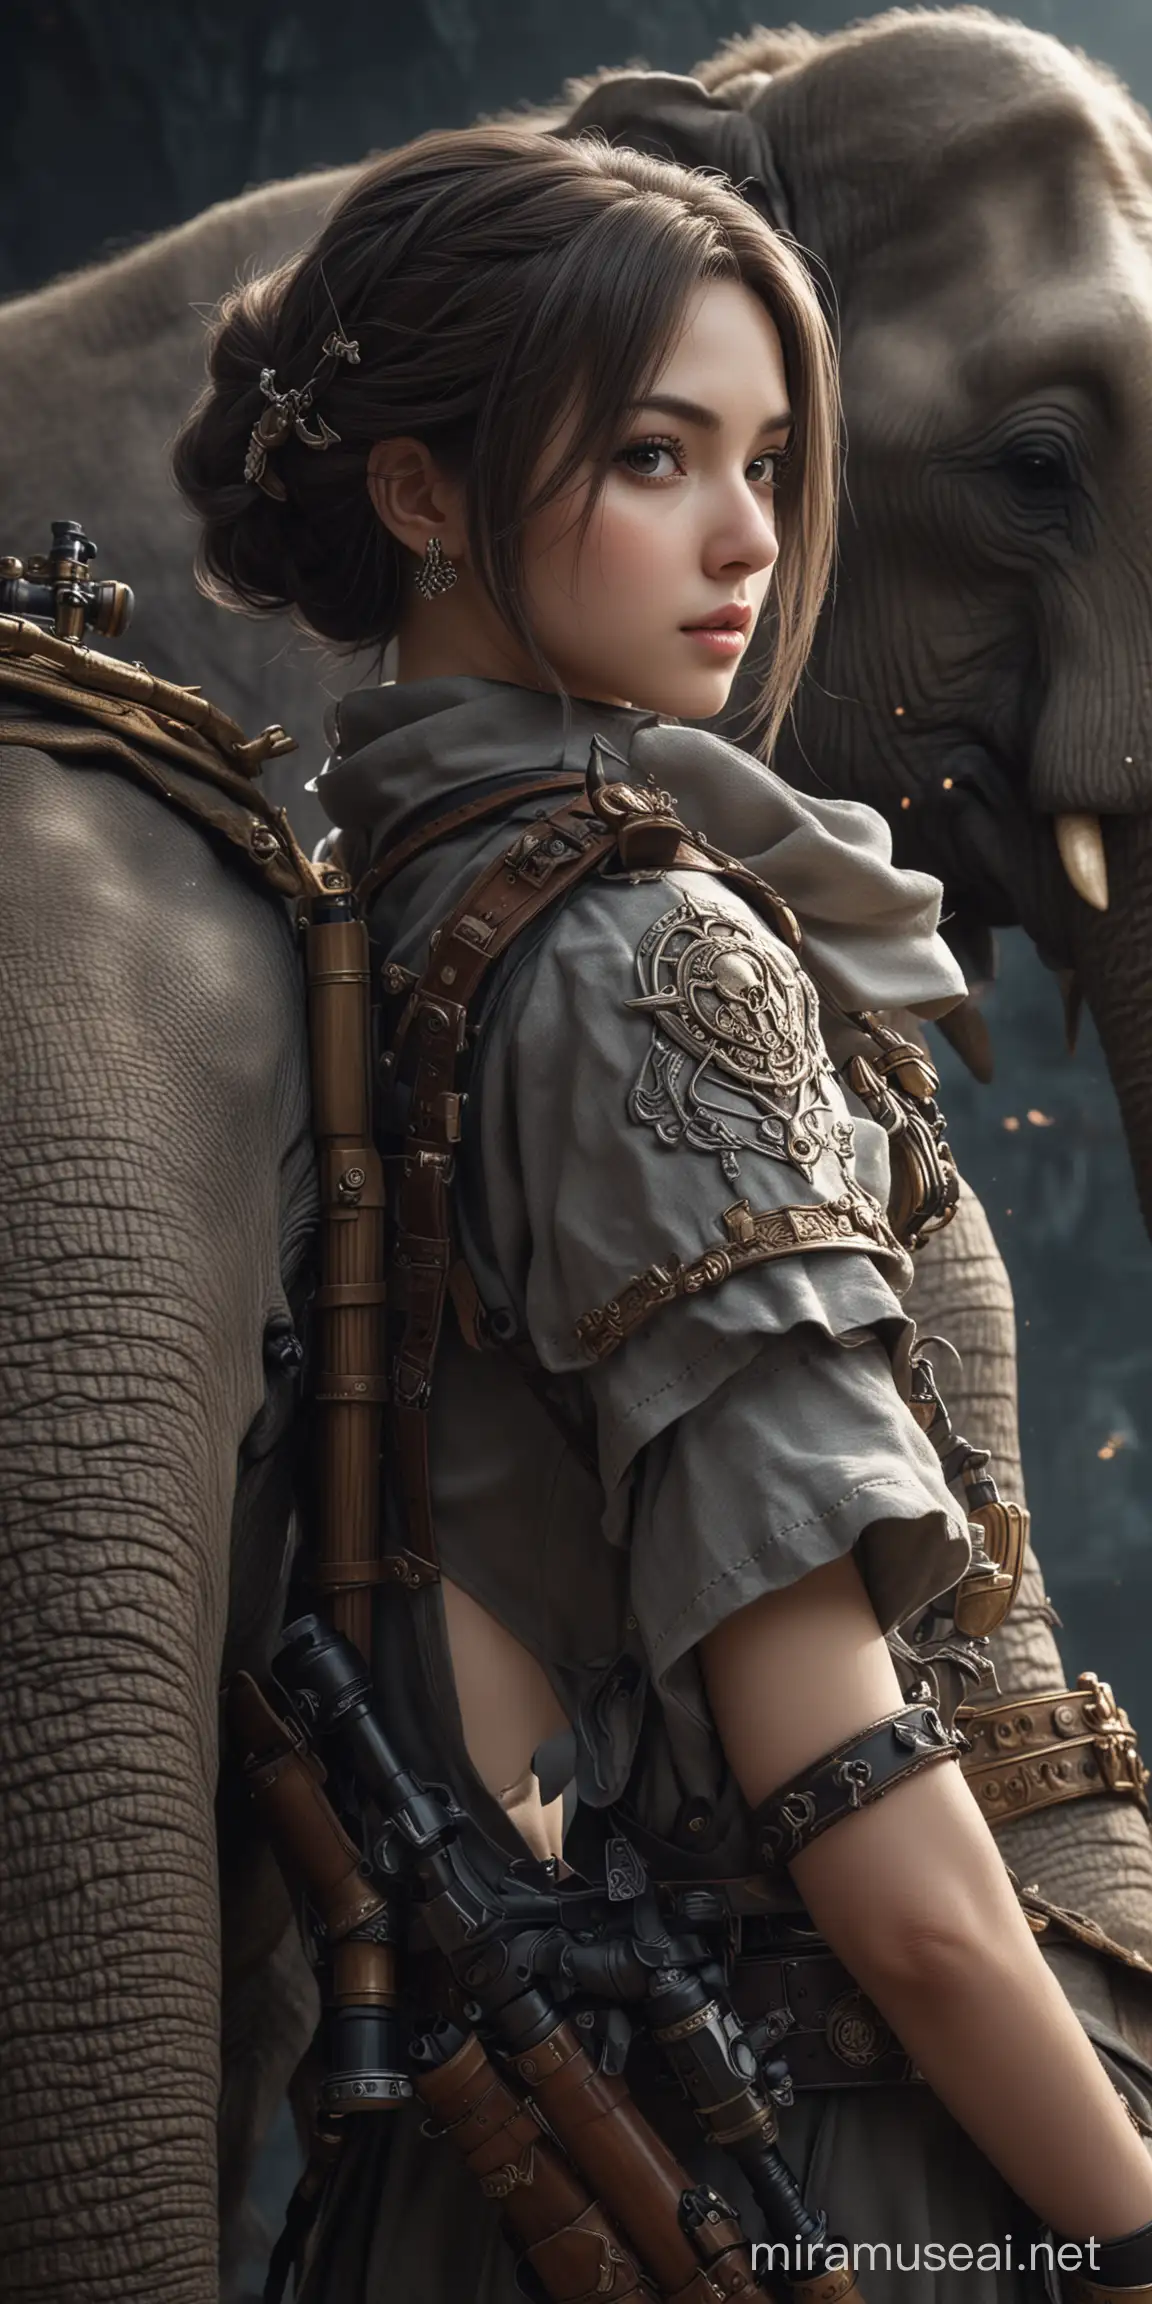 Realistic Beautiful Idol Girl with Elephant Element Sniper in Fantasy Isekai Setting